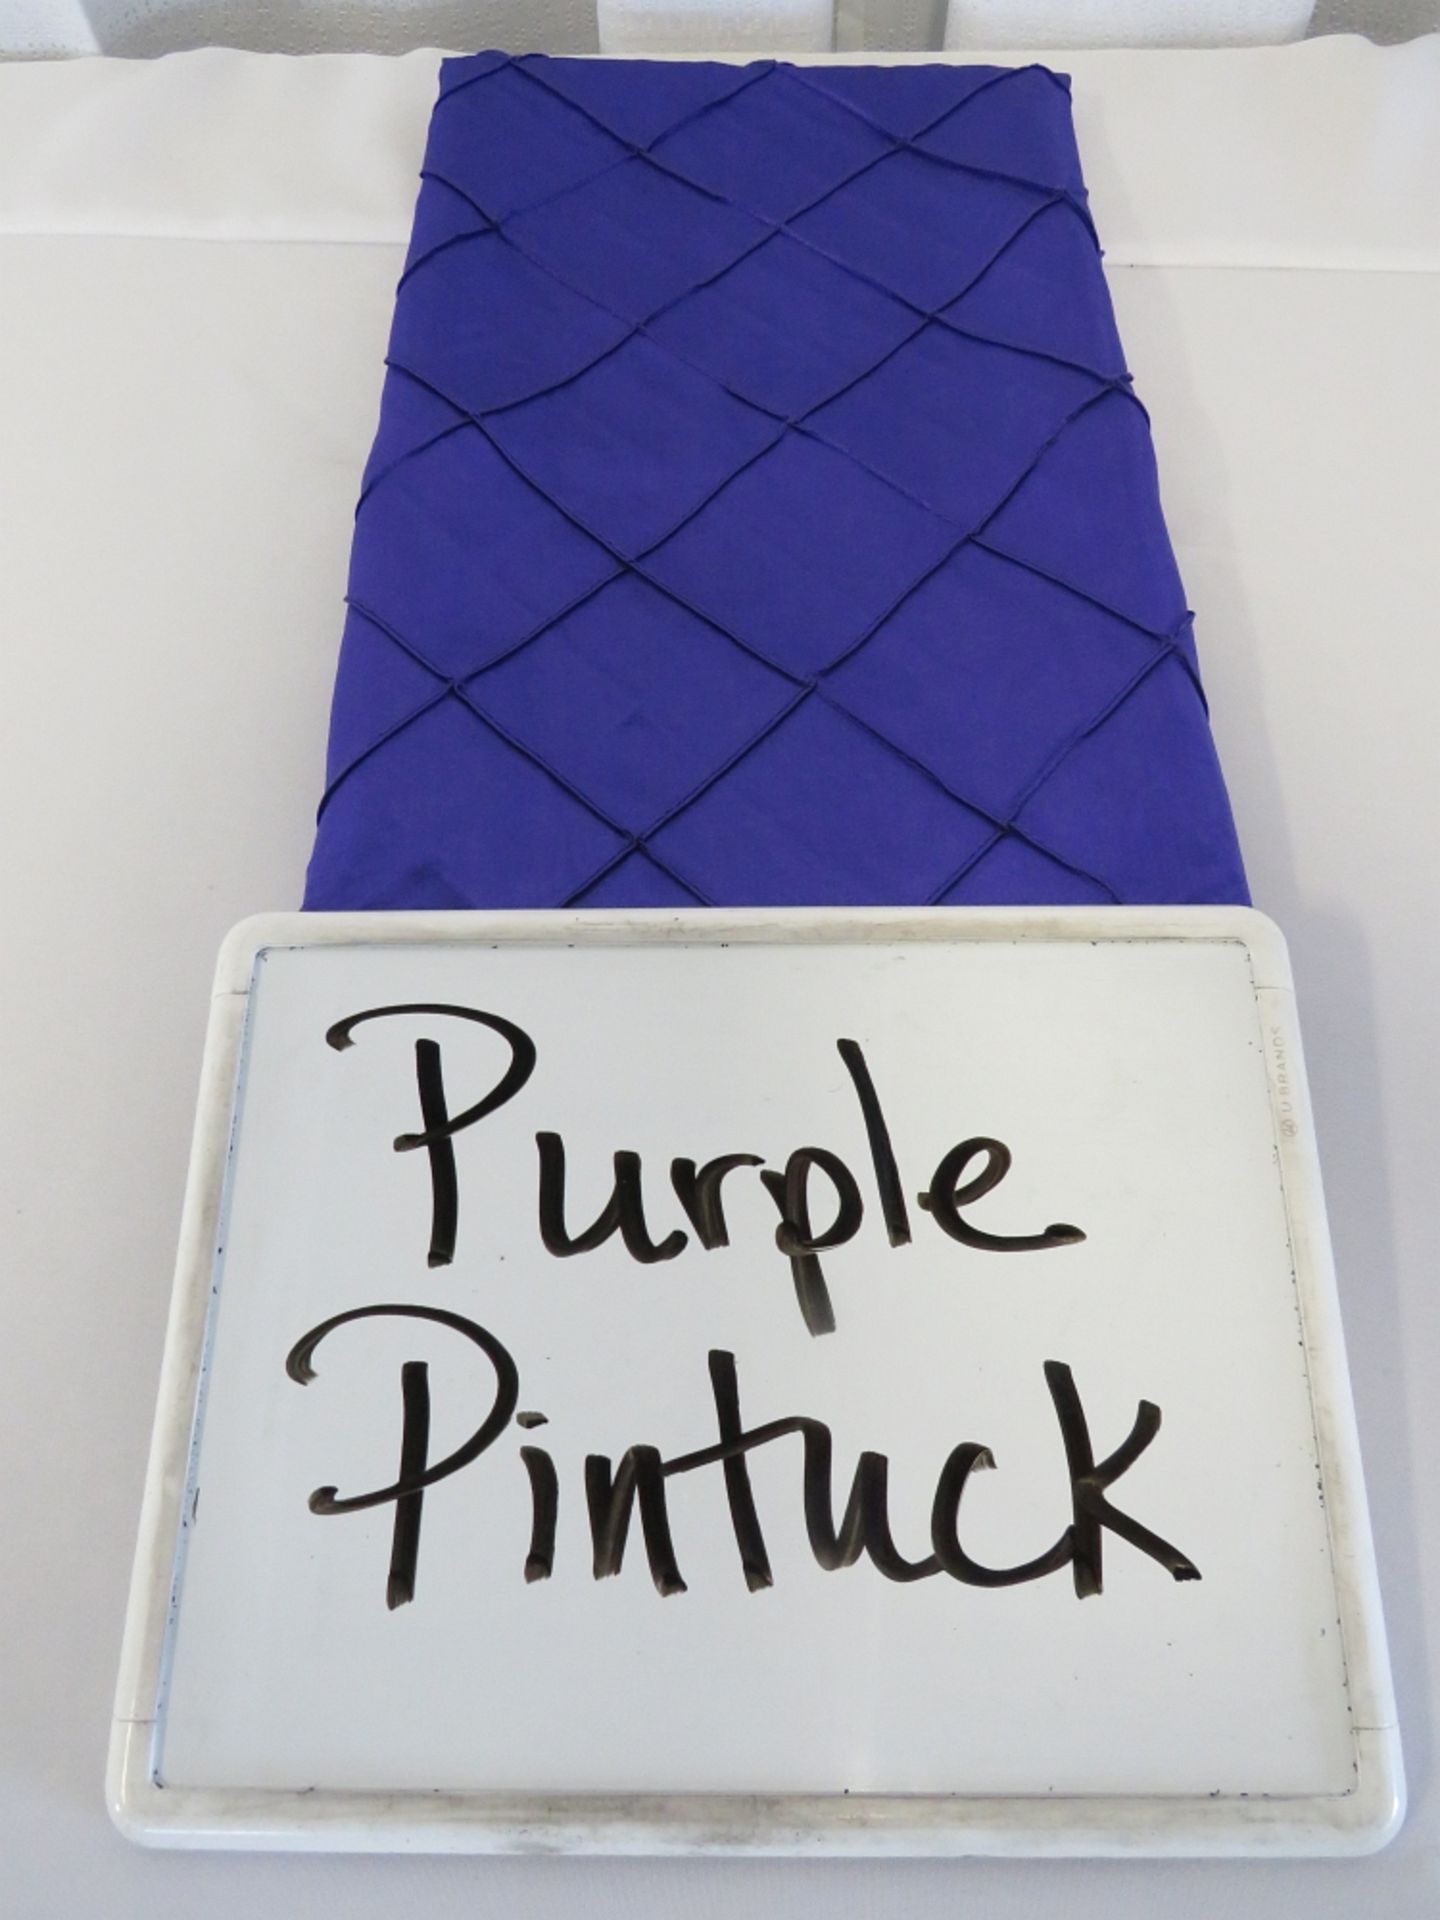 70" x 70" Tablecloth, Purple Pintuck